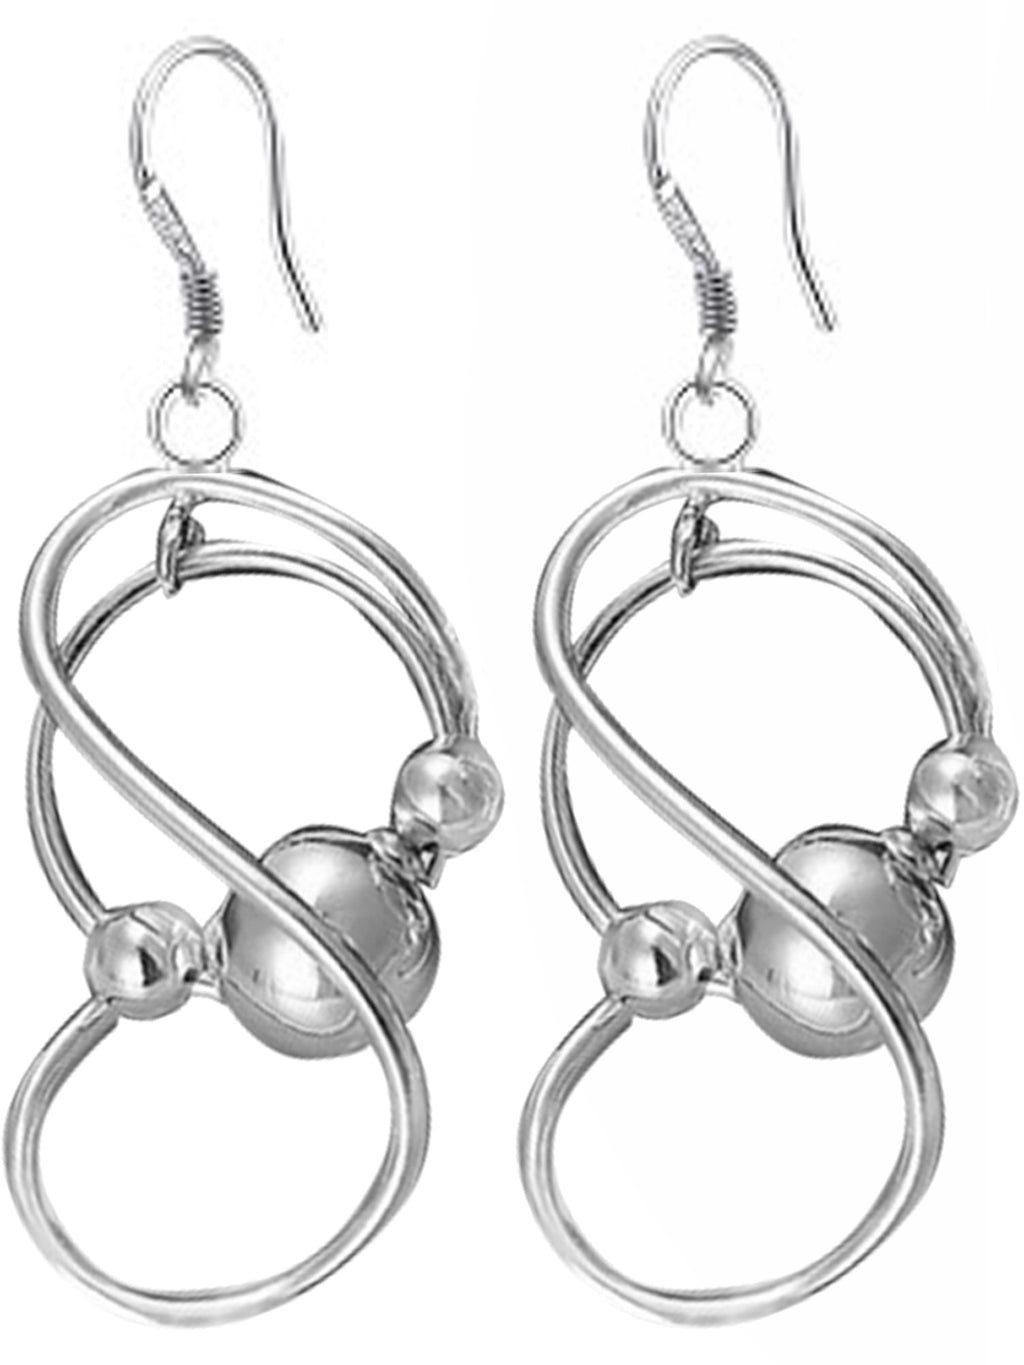 Twists & Balls Sterling Silver Plated Earrings